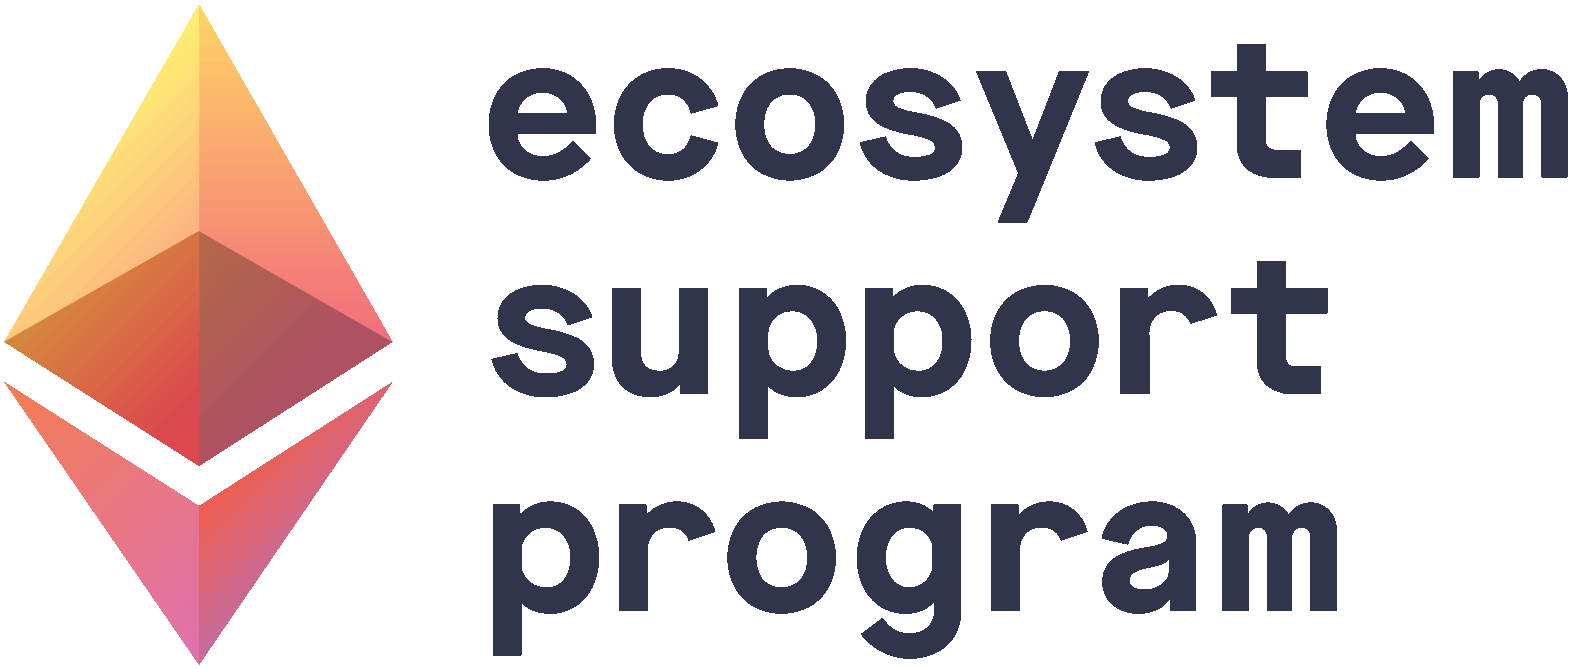 ef ecosystem support program 1